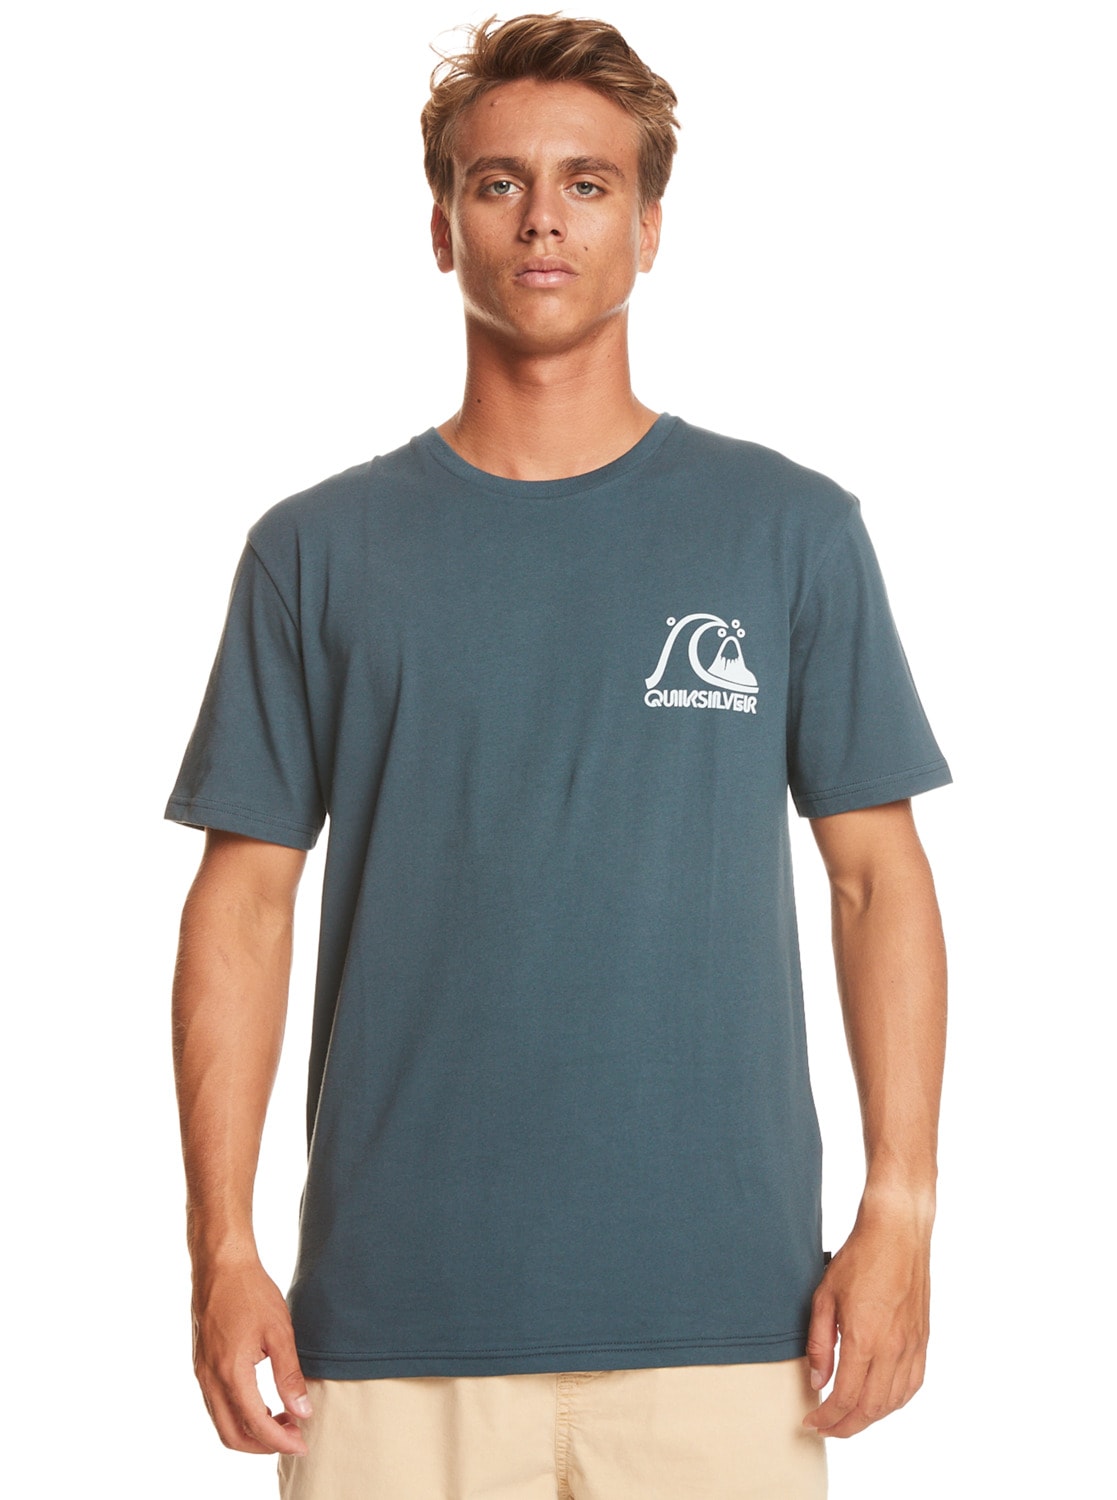 Quiksilver T-Shirt »The Original« online bestellen